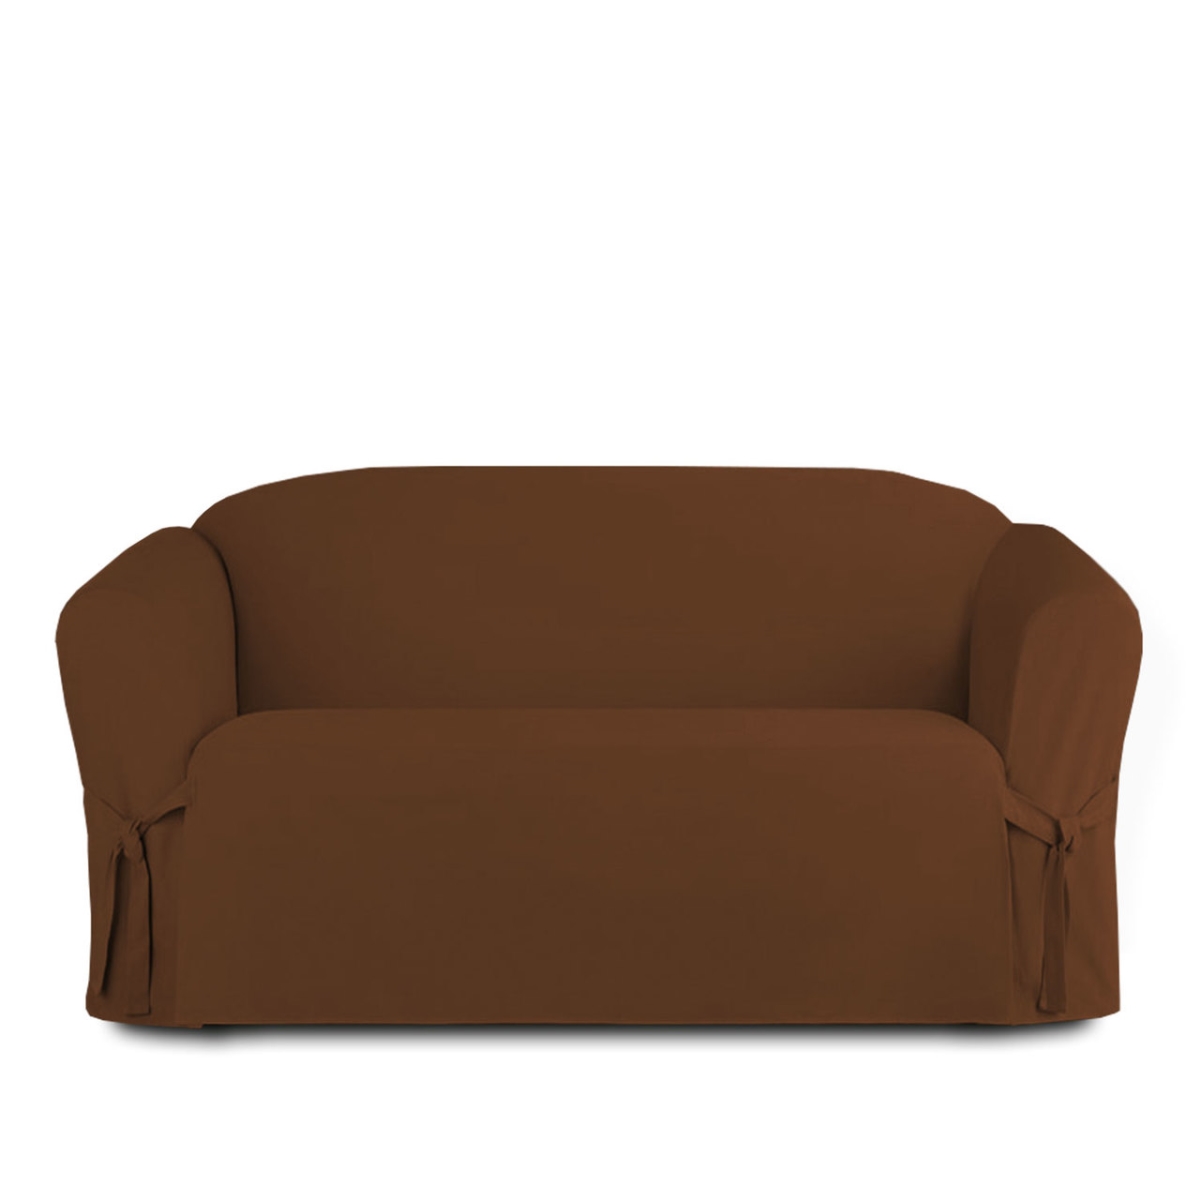 Sc406752 Microsuede Slip Furniture Protector For Loveseat, Brown